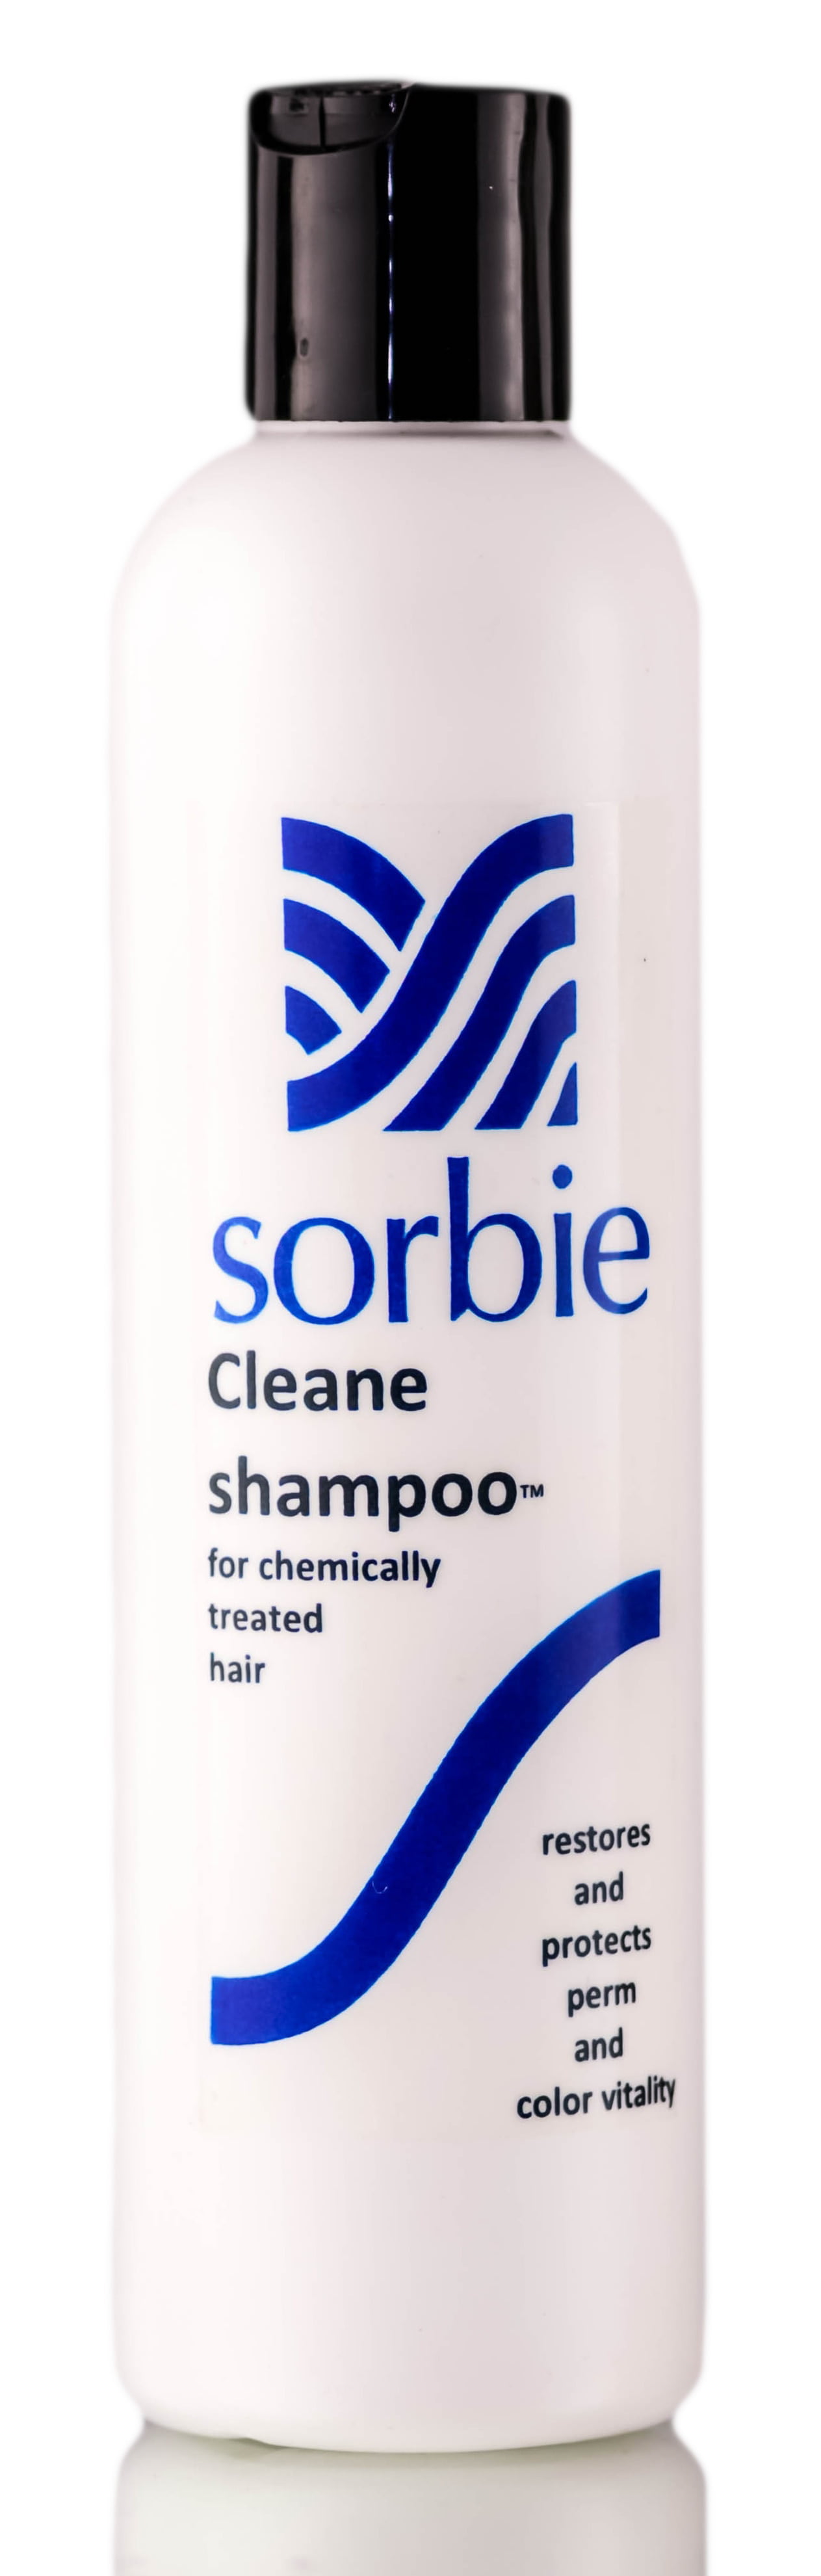 Trevor Sorbie Cleane Shampoo for Chemically Treated Hair oz) - Walmart.com